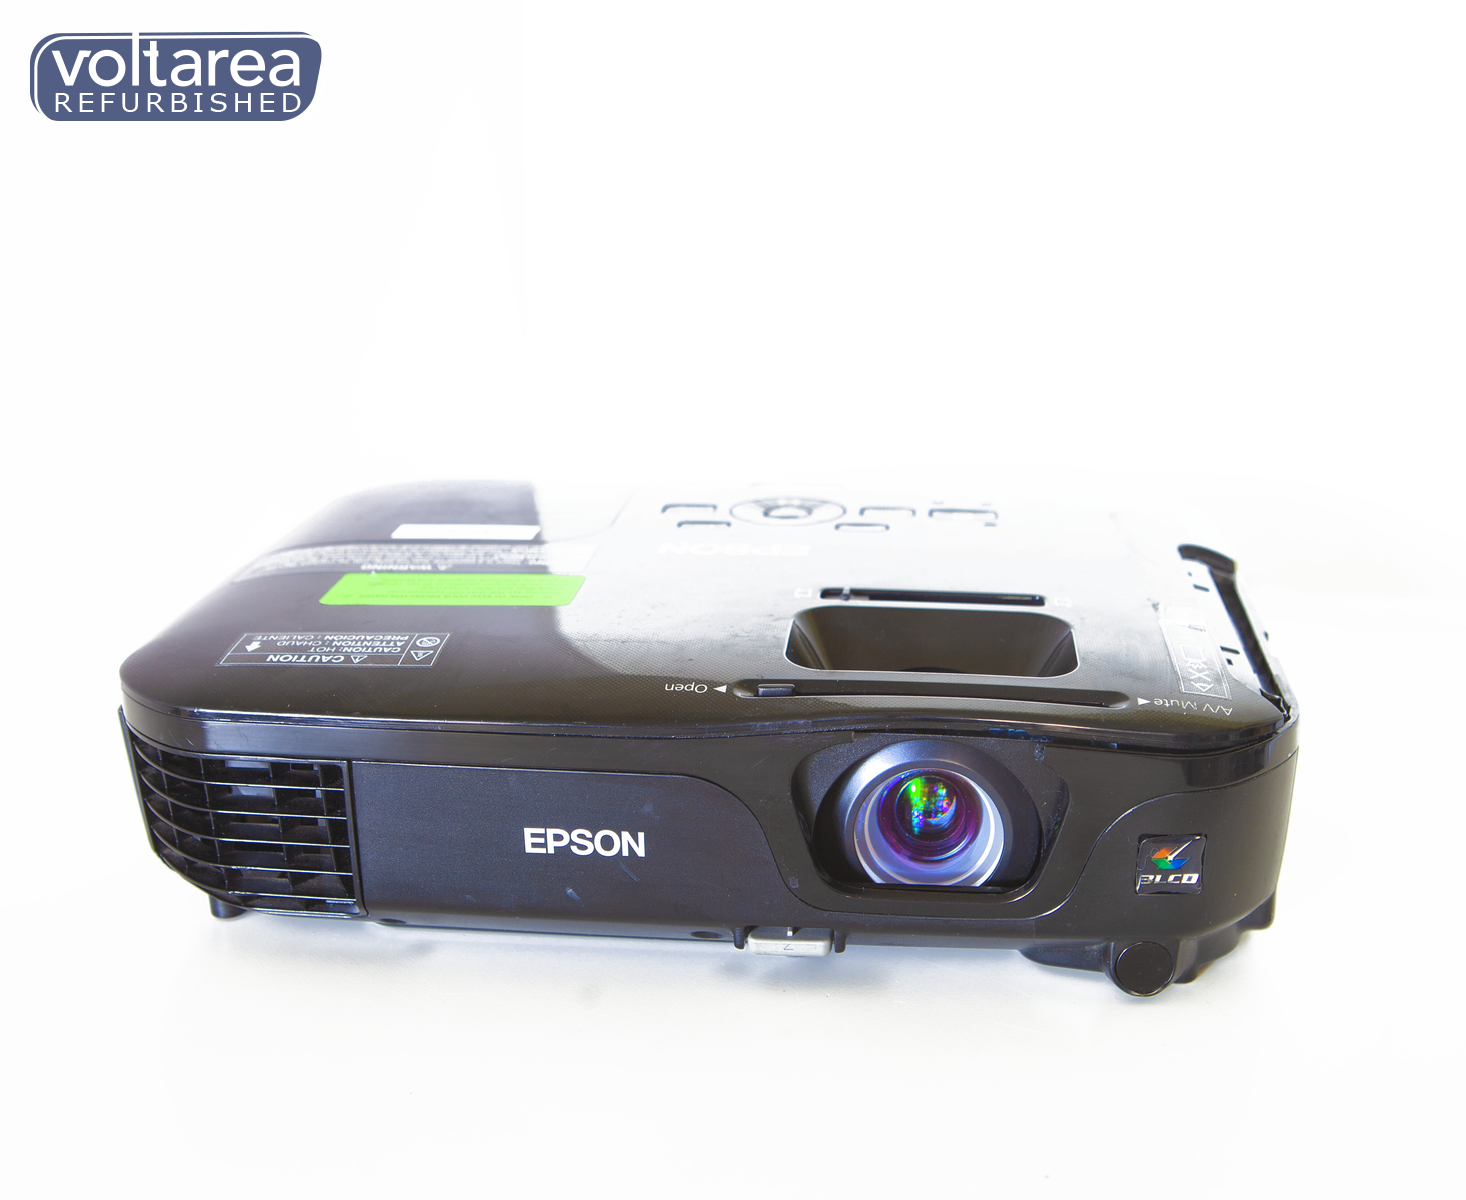 Epson ex5210 Projector REFURBISHED